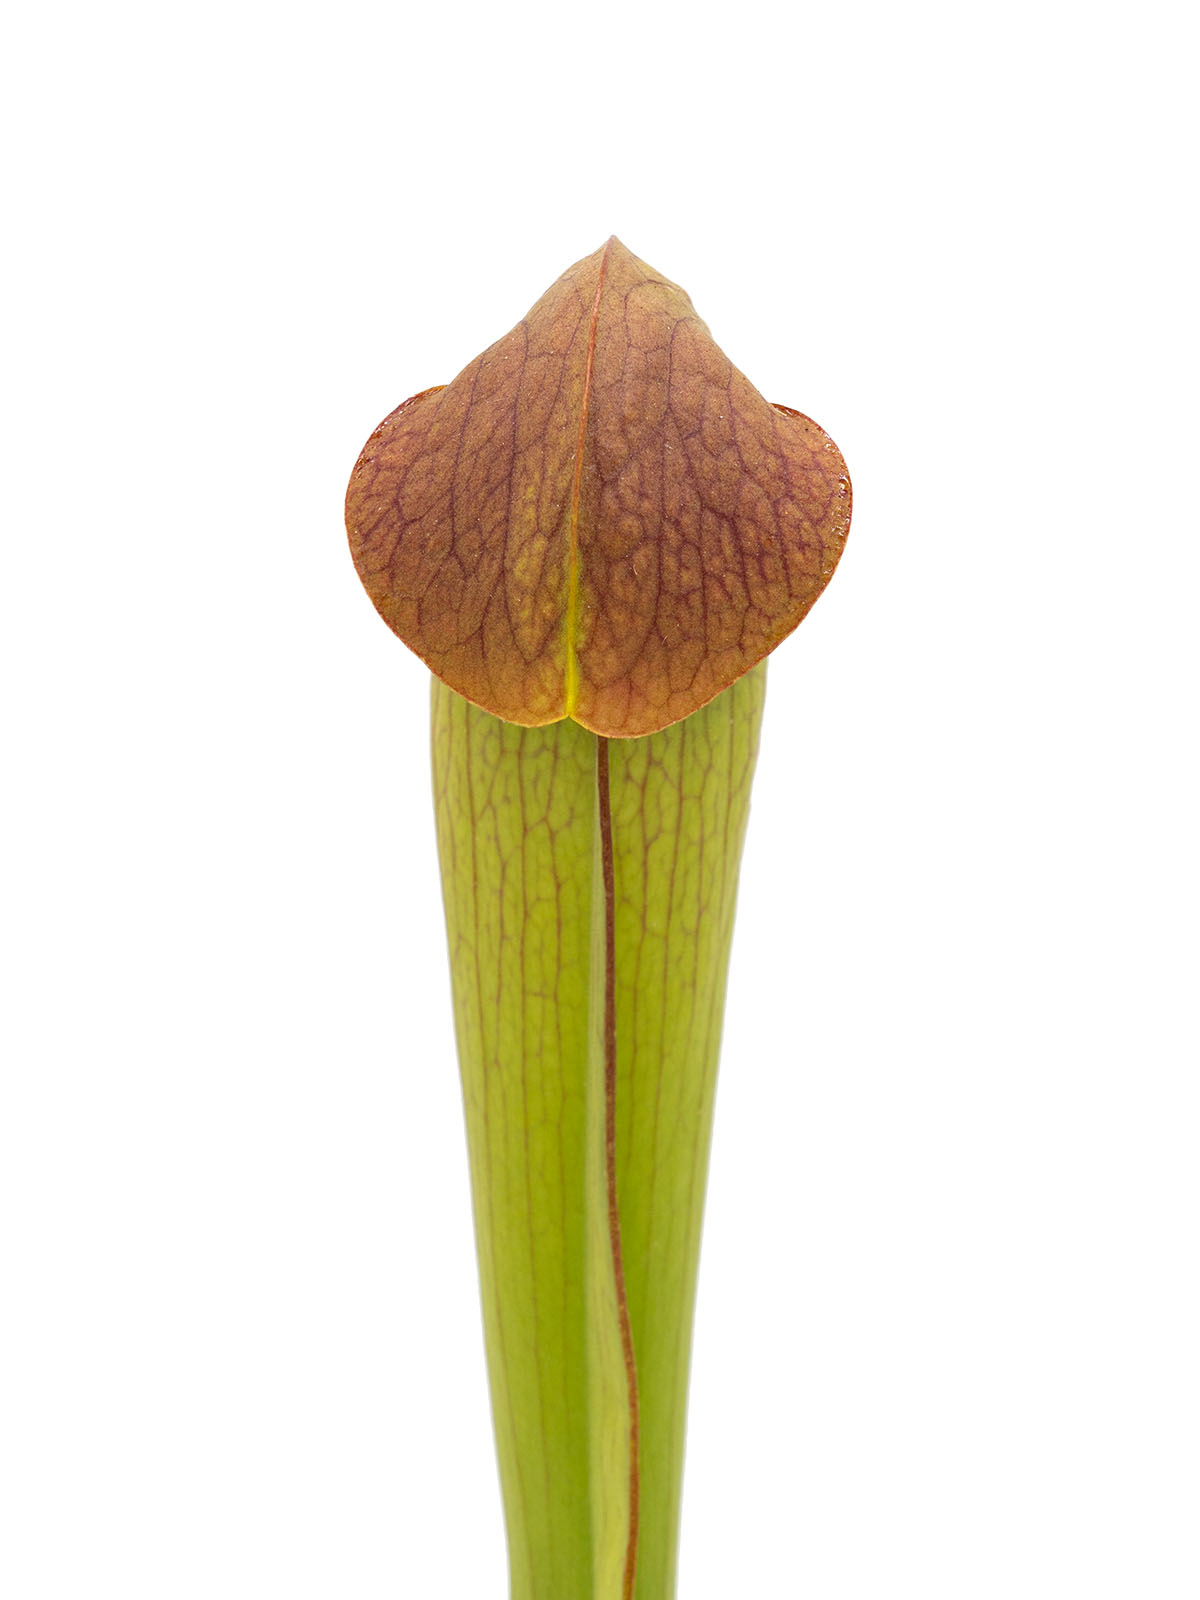 Sarracenia minor var. okefenokeensis - Okefenokee Giant